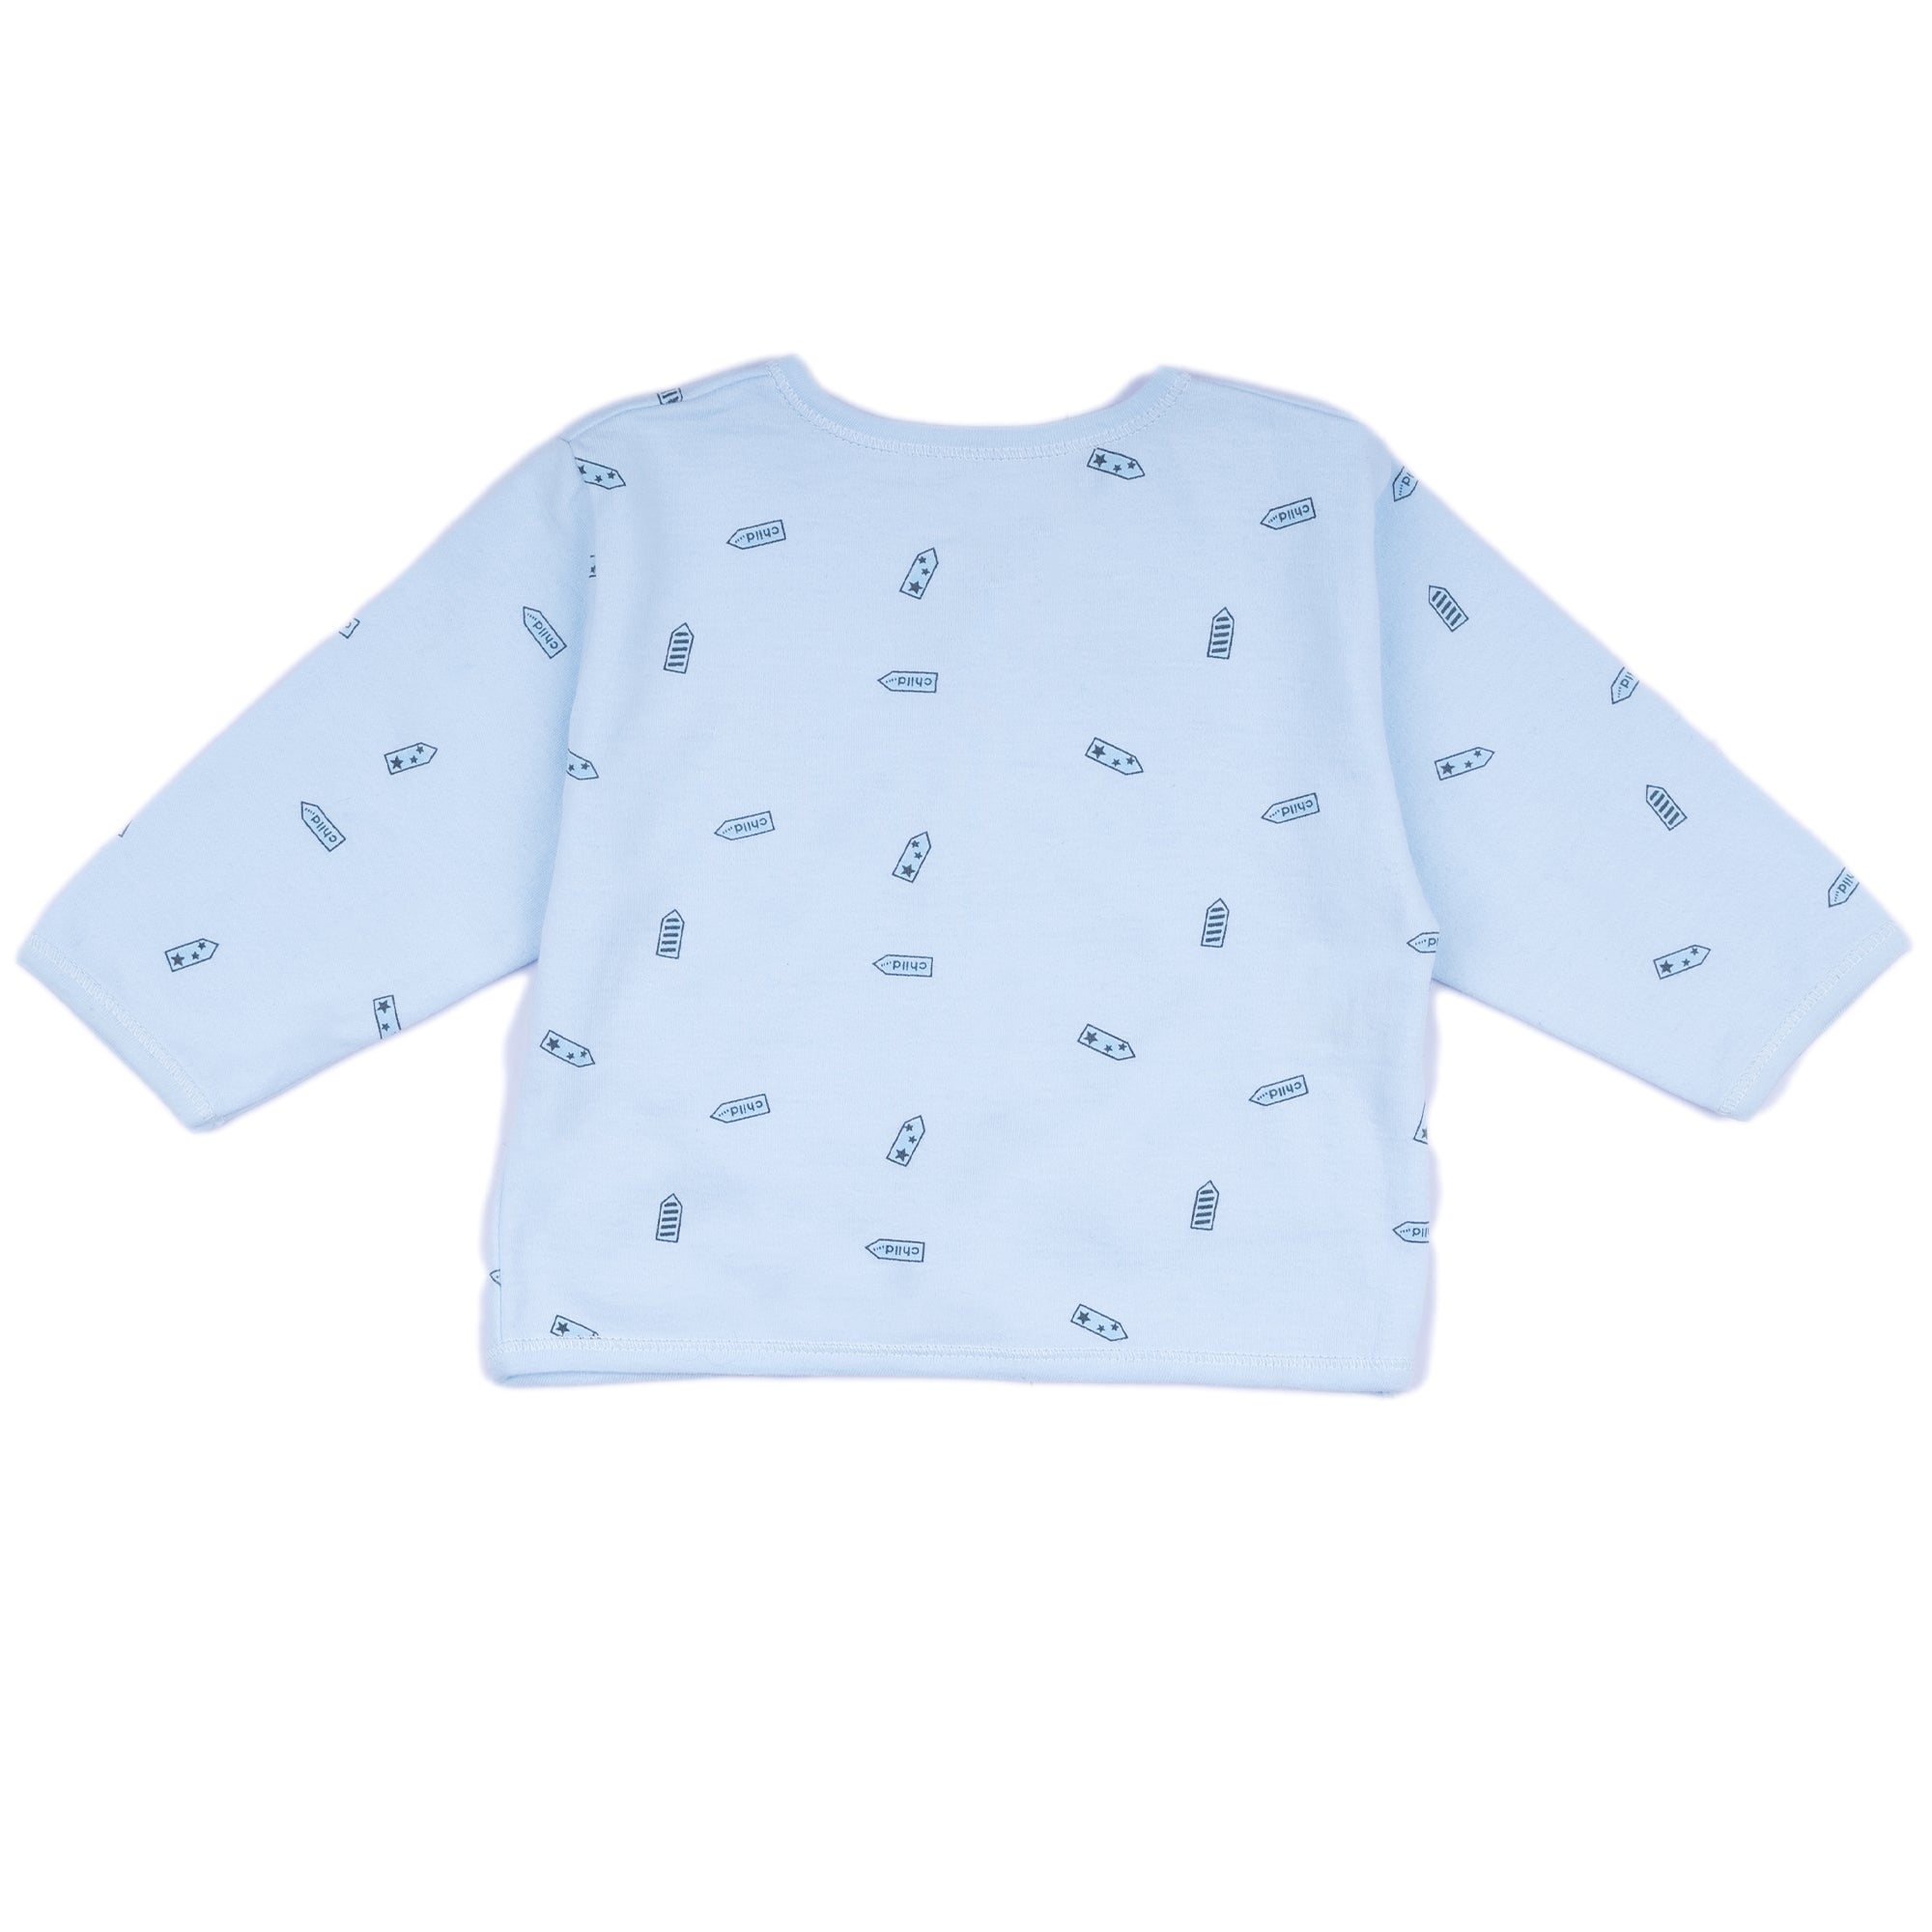 Baby Moo Happy Teddy Printed Cap Bib Pyjamas 5 Pcs Clothing Gift Set - Blue